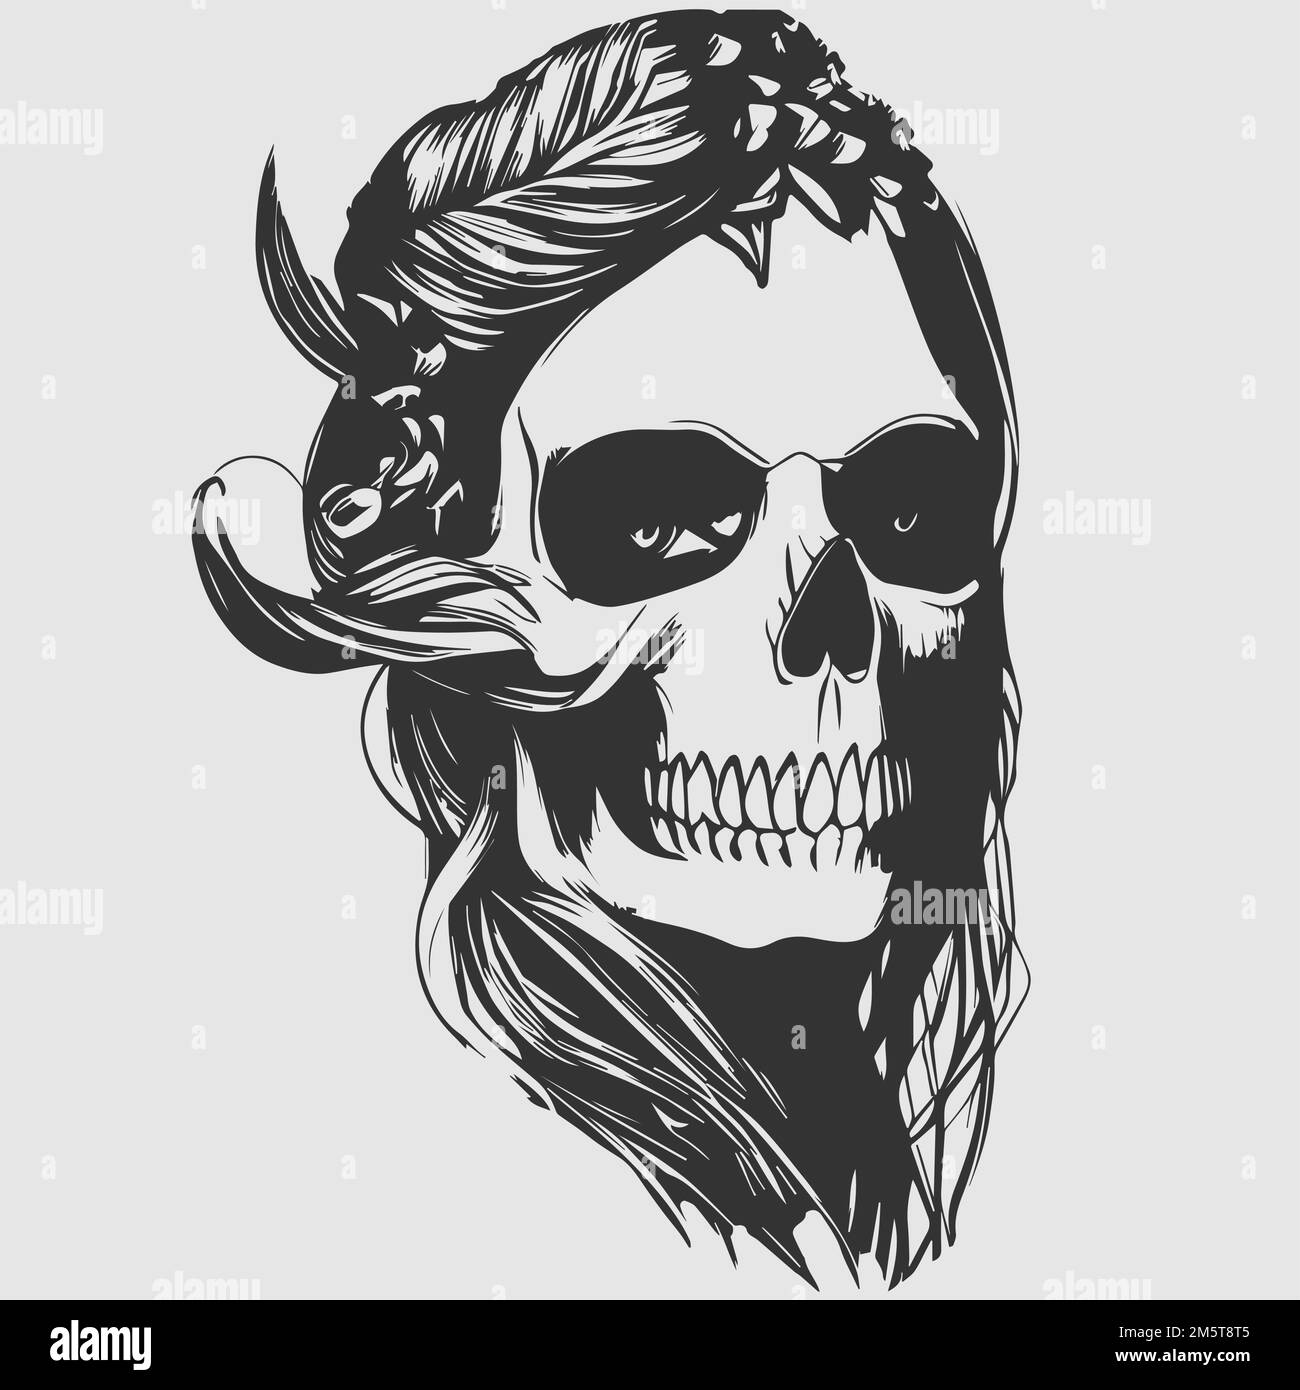 c8./comp/2M5T8T5/feminine-skull-tattoo-ha